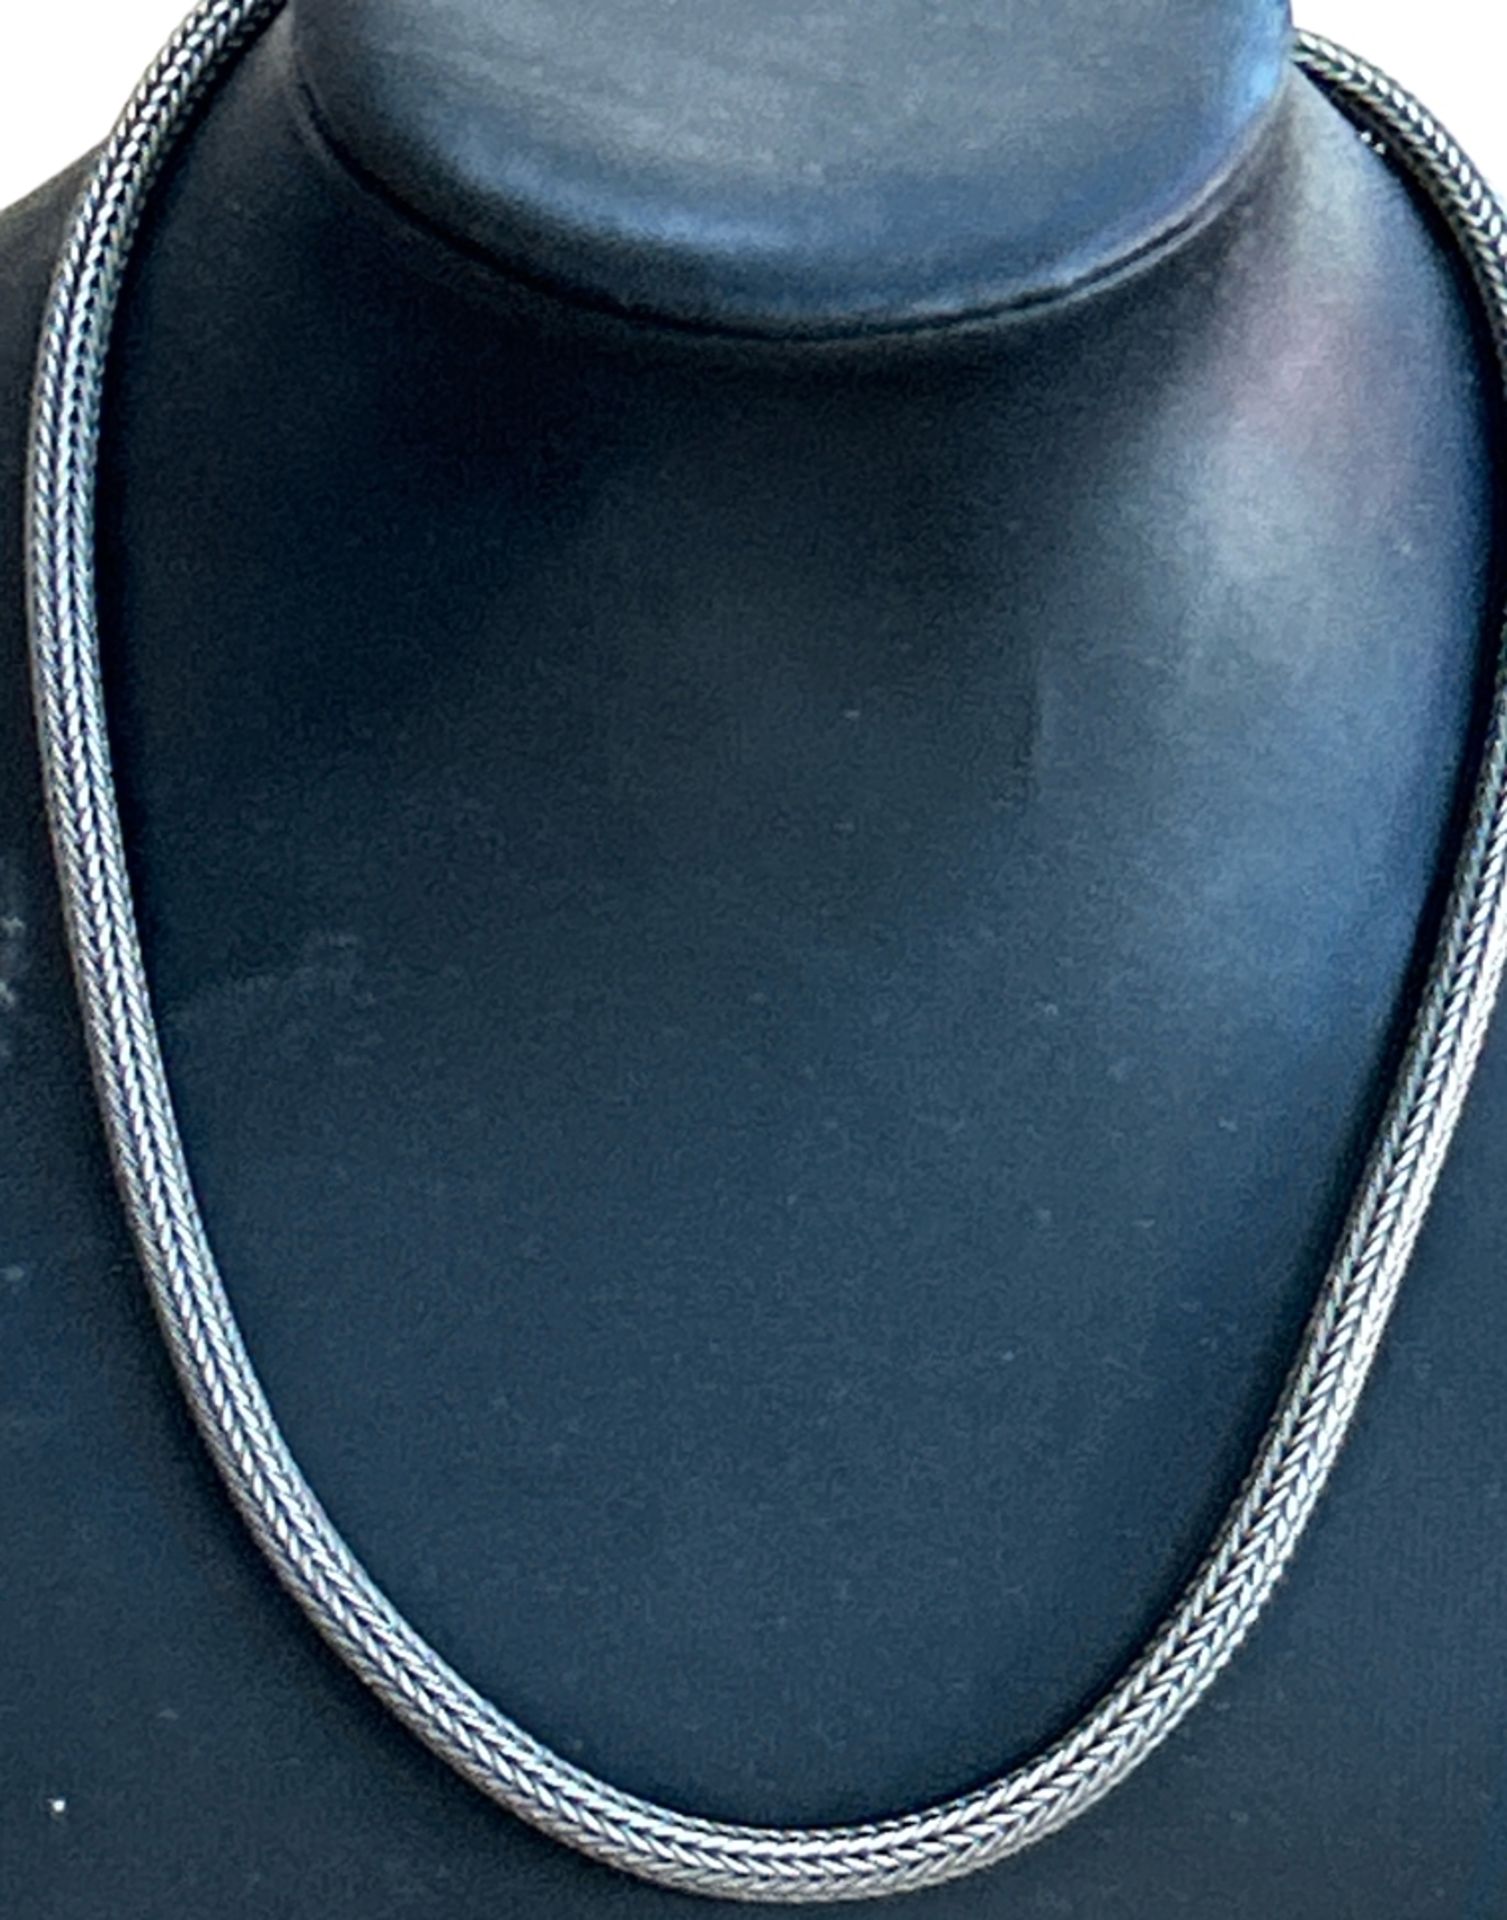 Silber-925- Halsband, L-42 cm, 32 gr.